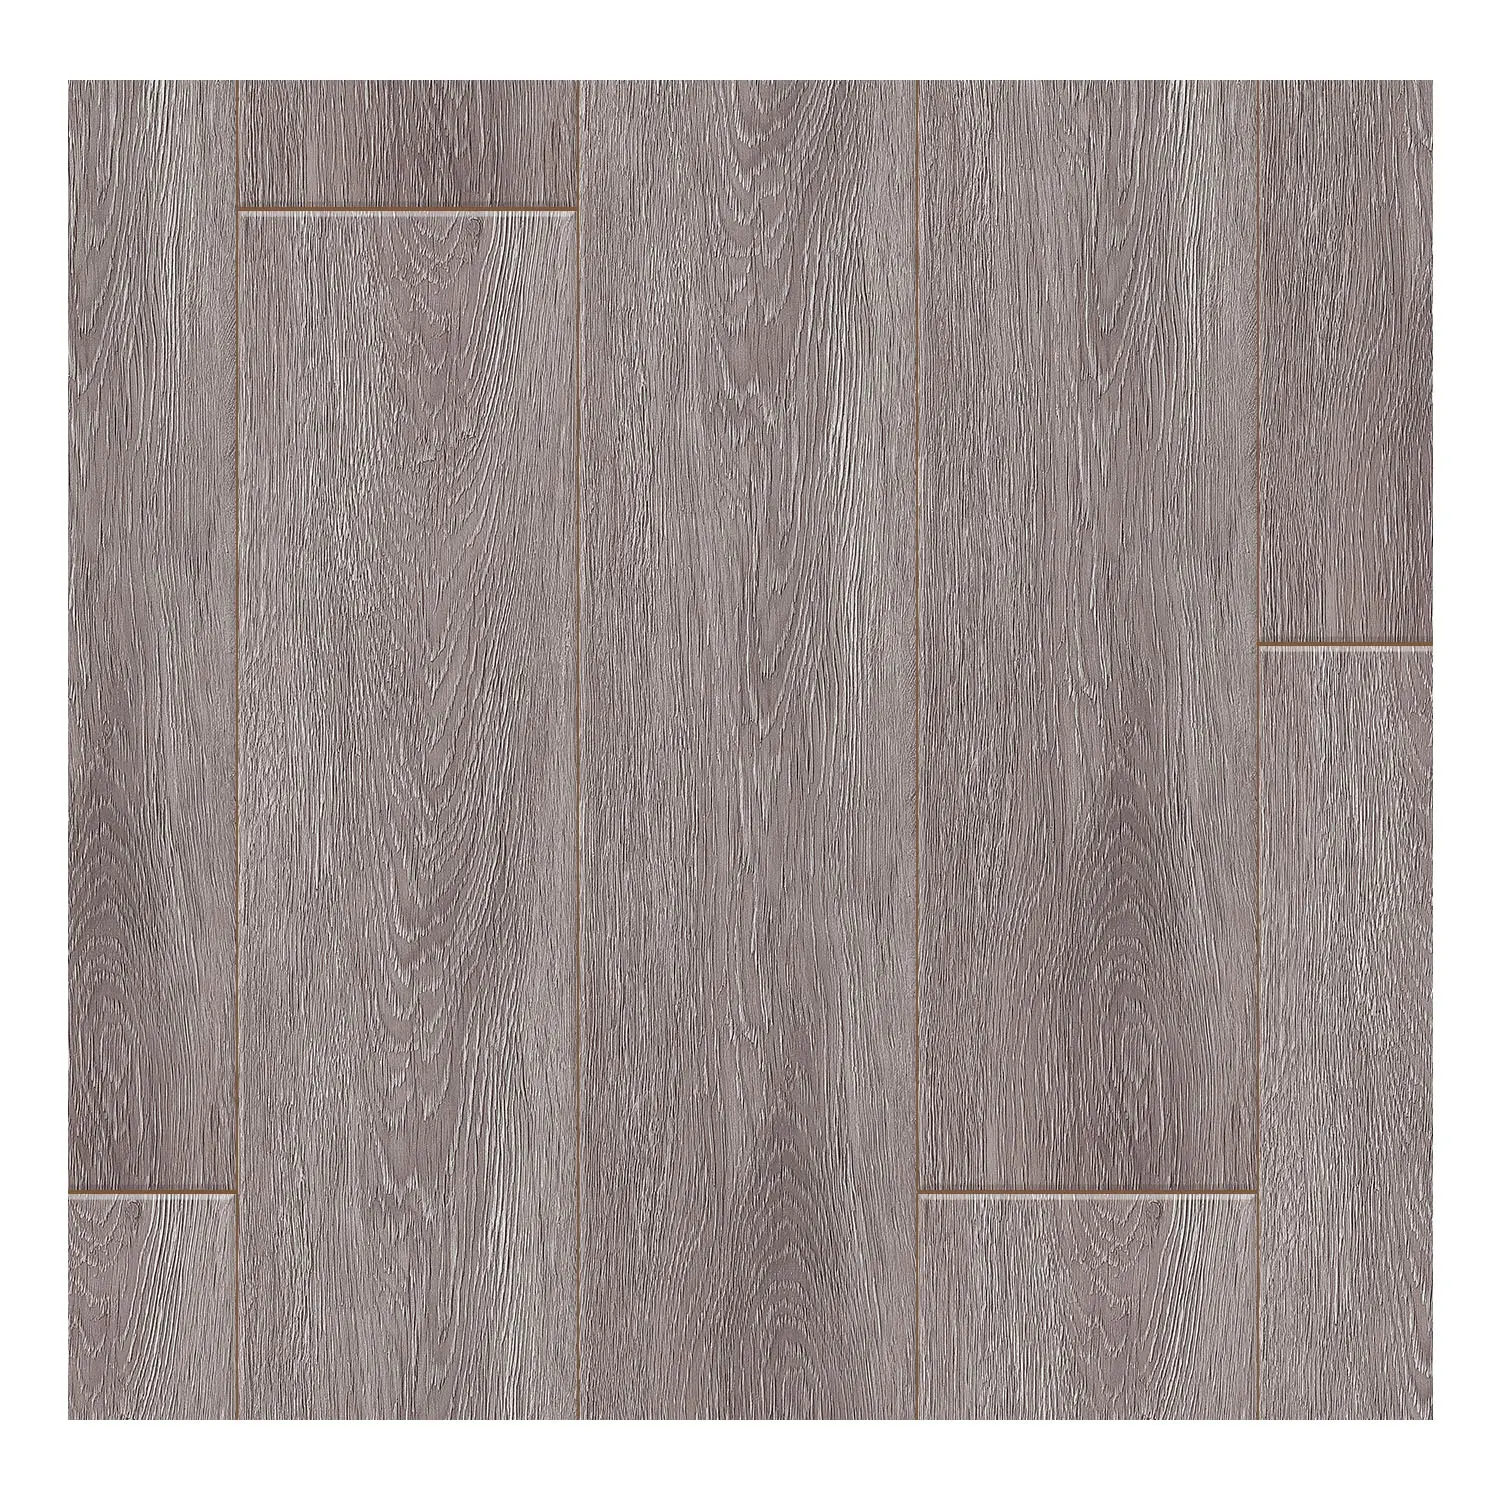 Grey Wood Grain PVC Piso 2mm Luxo Vinyl Flooring Waterproof Peel and Stick Tiles adesivo Design Interior